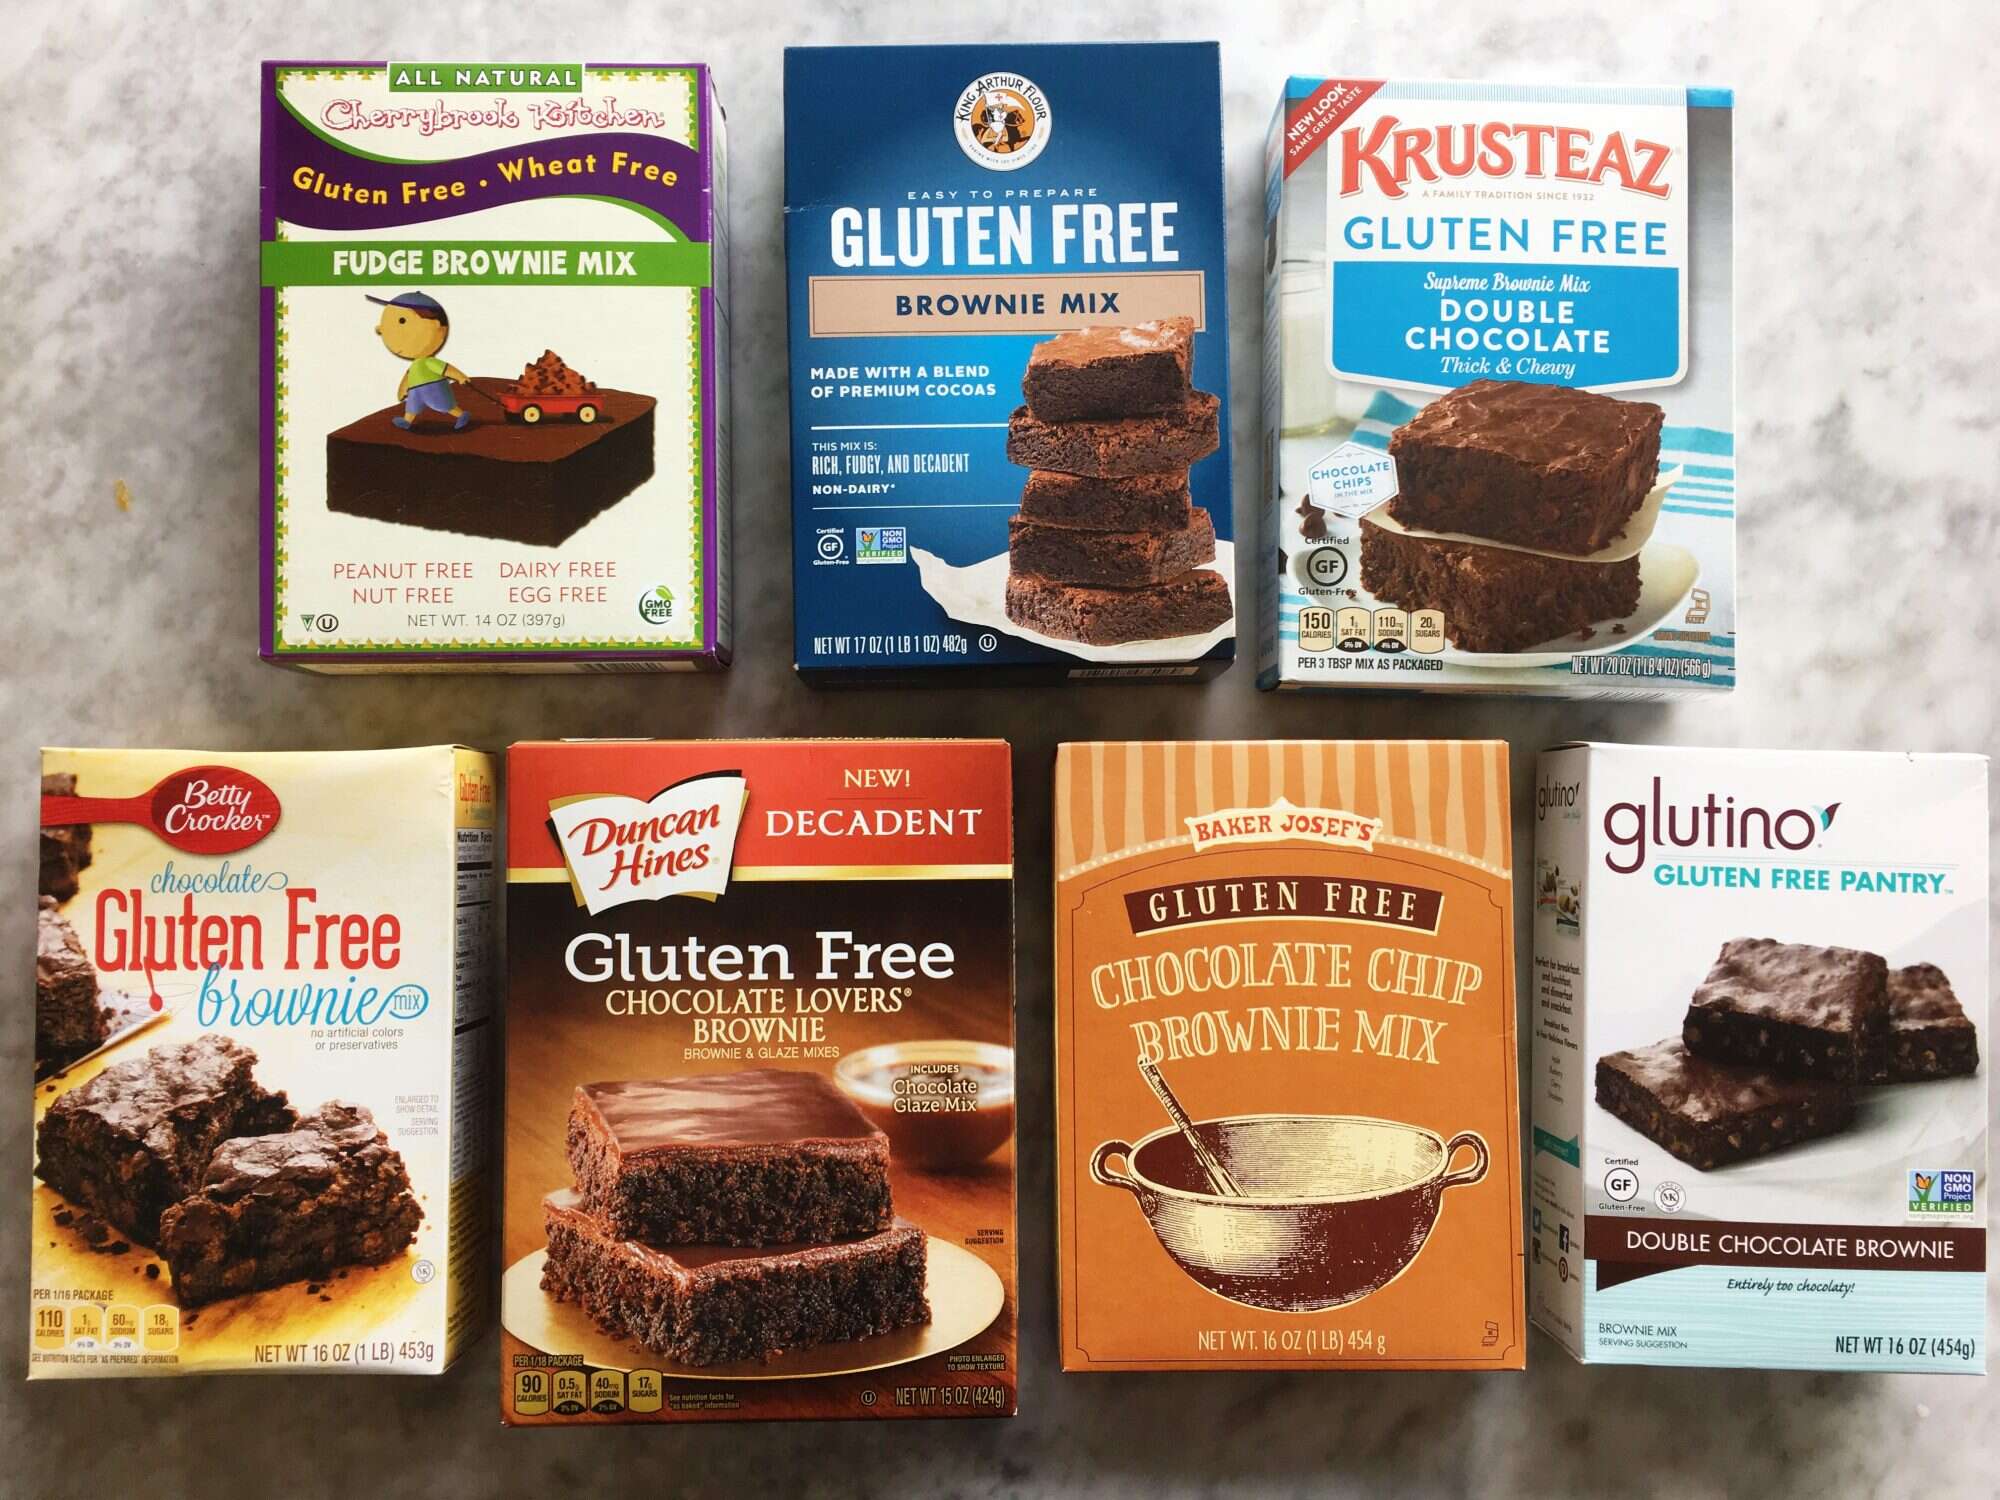 King Arthur Gluten-Free Brownies